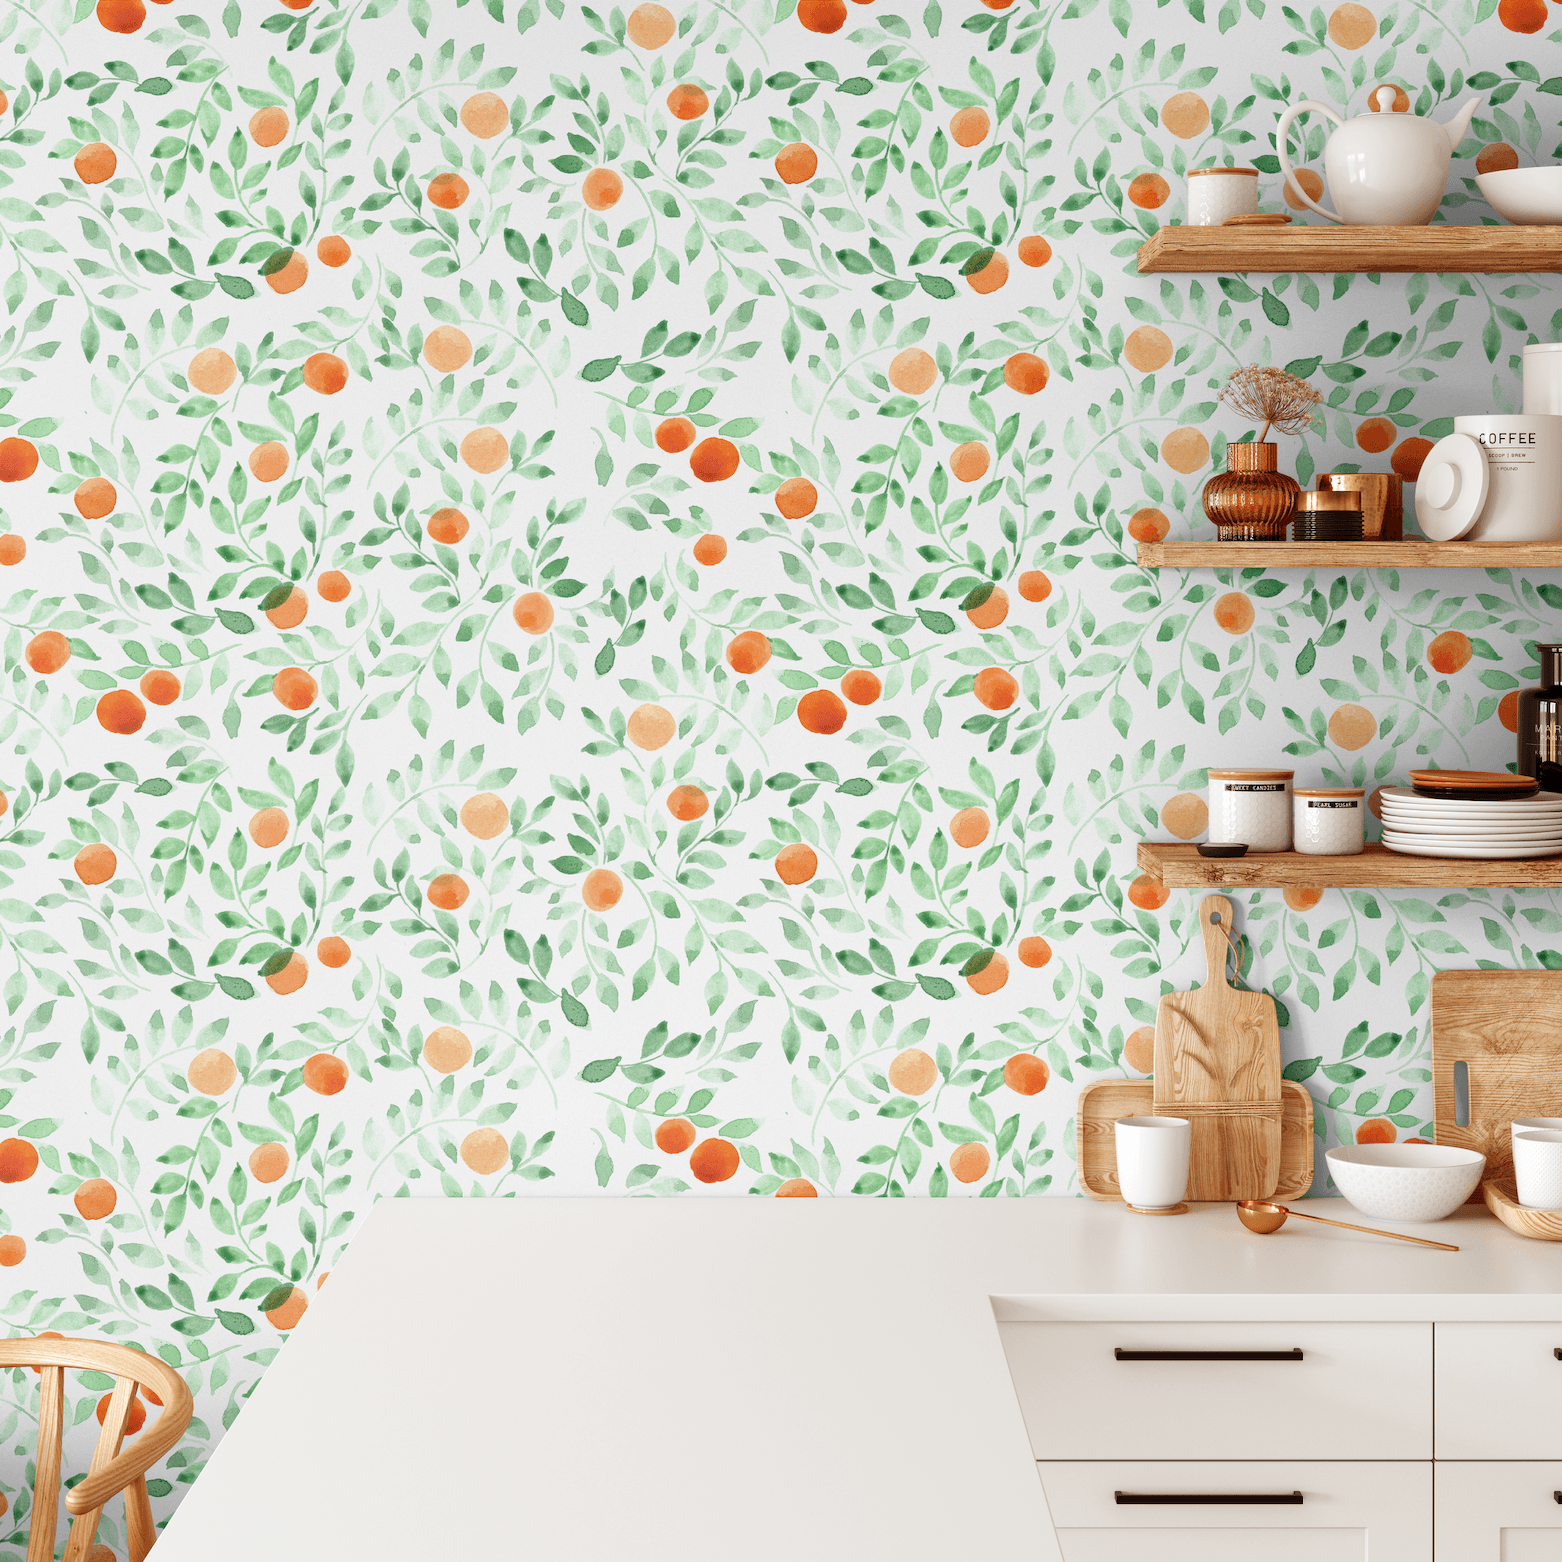 Oranges and leaves wallpaper, aesthetic wallpaper, oranges